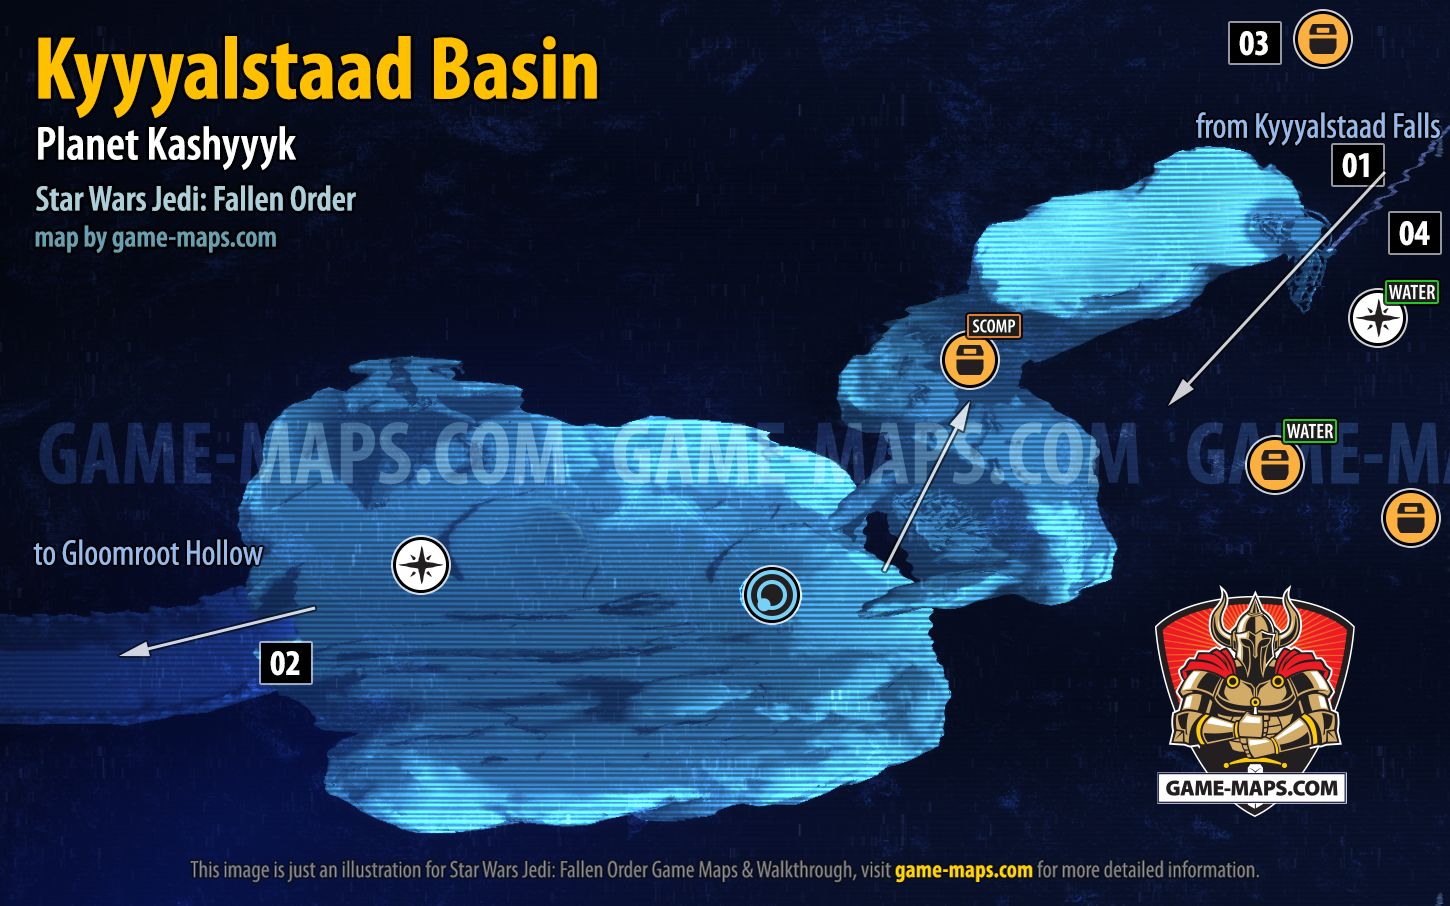 Kyyyalstaad Basin Map, Planet Kashyyyk for Star Wars Jedi Fallen Order